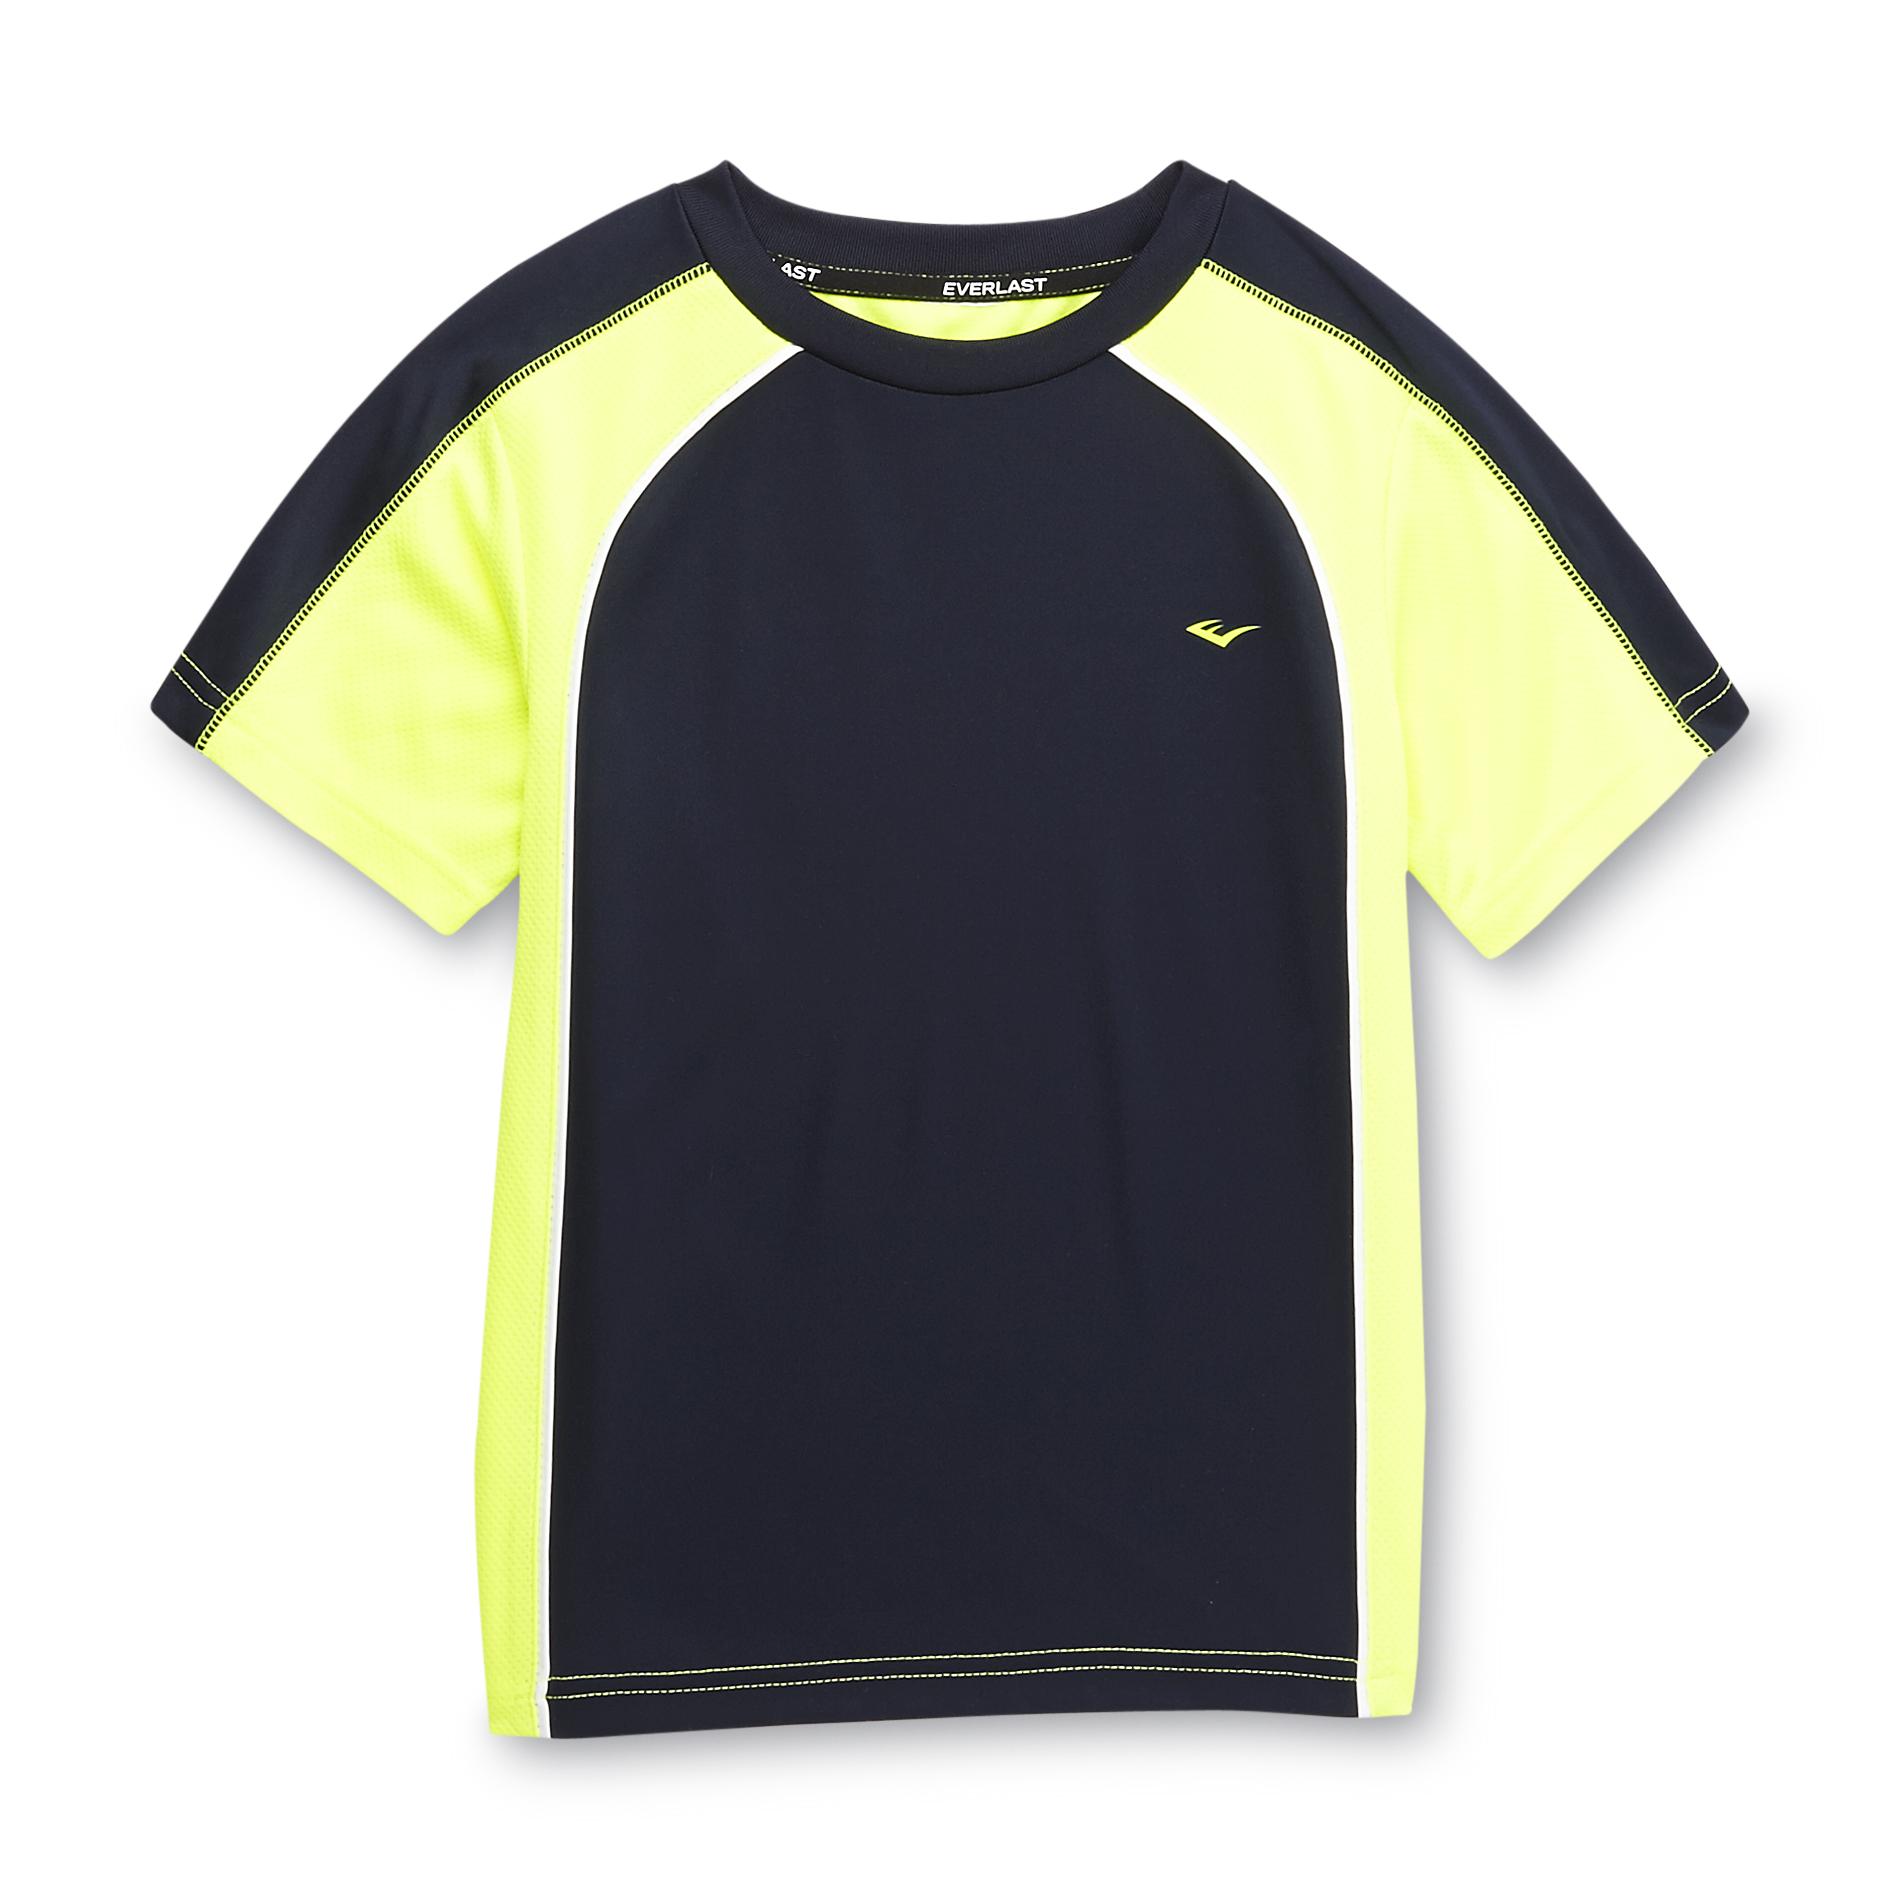 Everlast&reg; Boy's Short-Sleeve Athletic Shirt - Neon Mesh